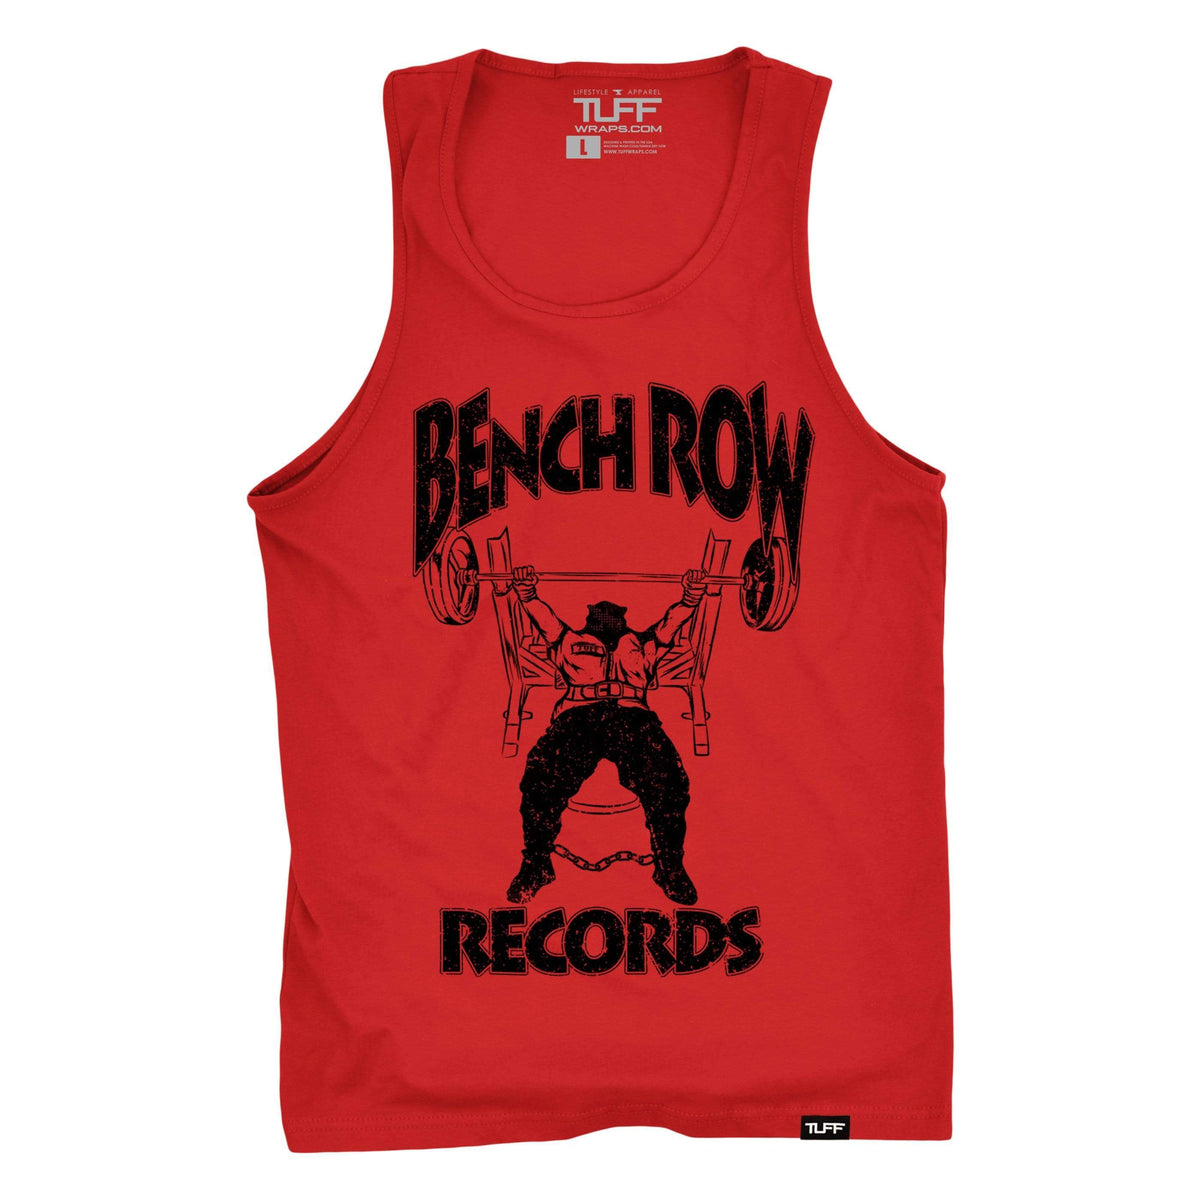 Bench Row Records Tank S / Red TuffWraps.com